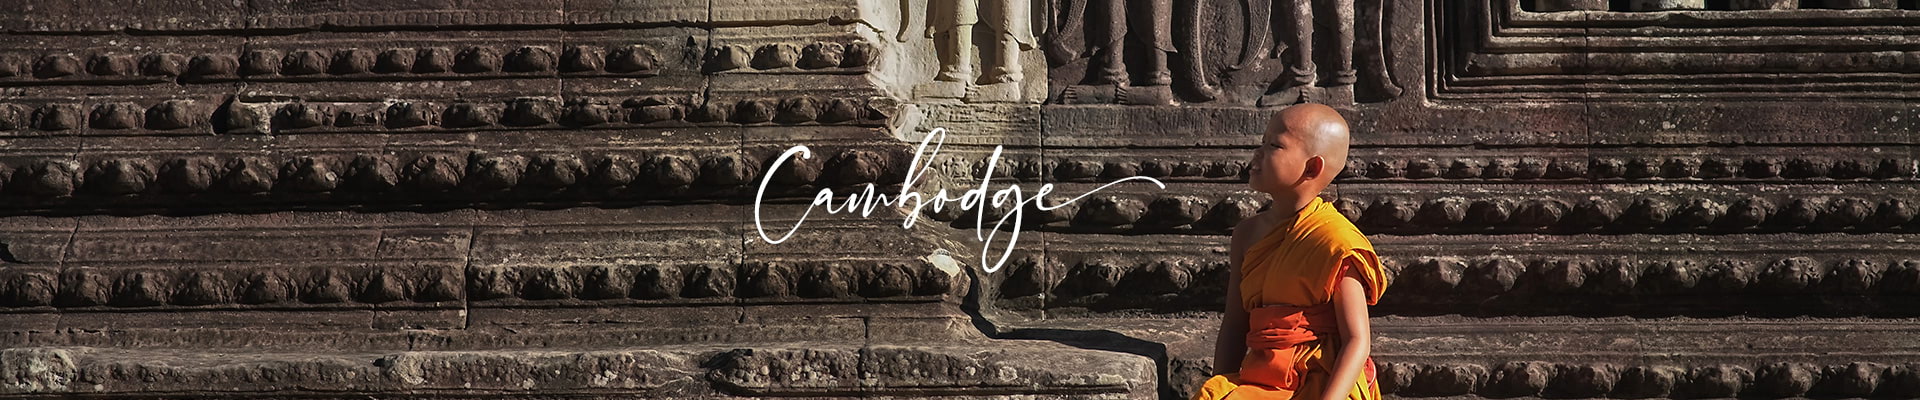 images/panos/desktop/cambodge